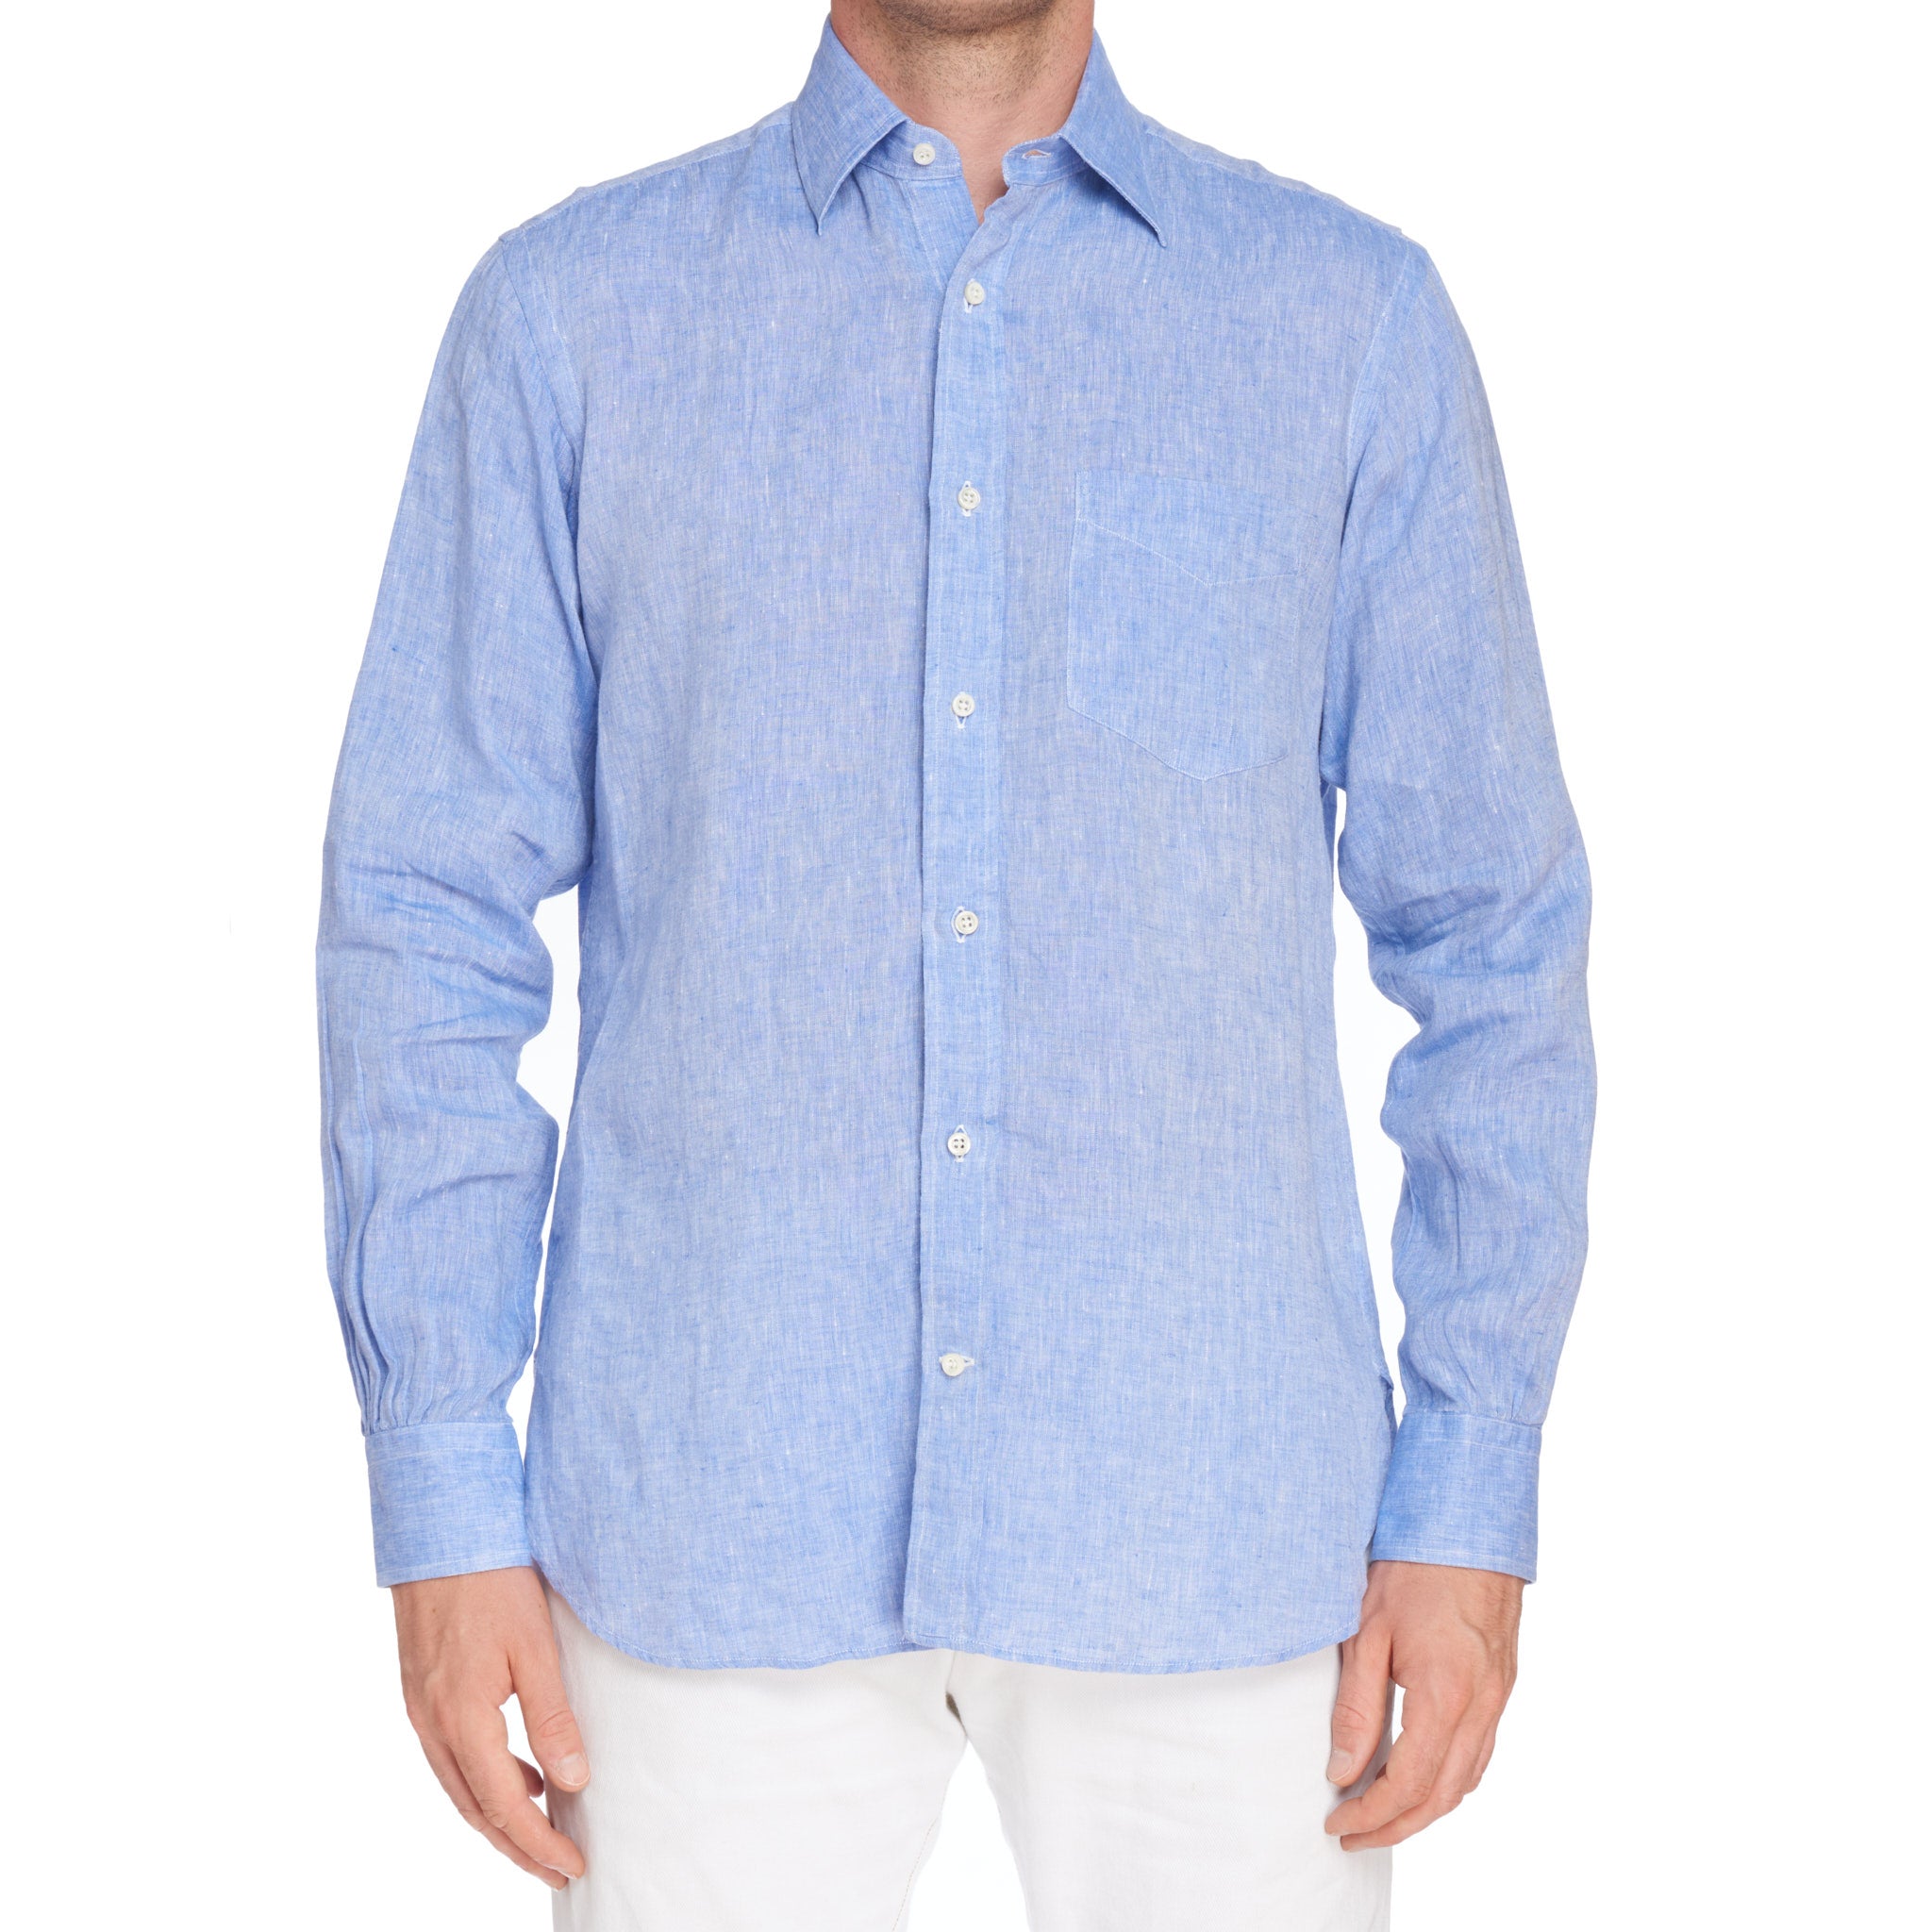 M.BARDELLI Milano Chambray Blue Linen 1 Pocket Casual Shirt NEW Size M